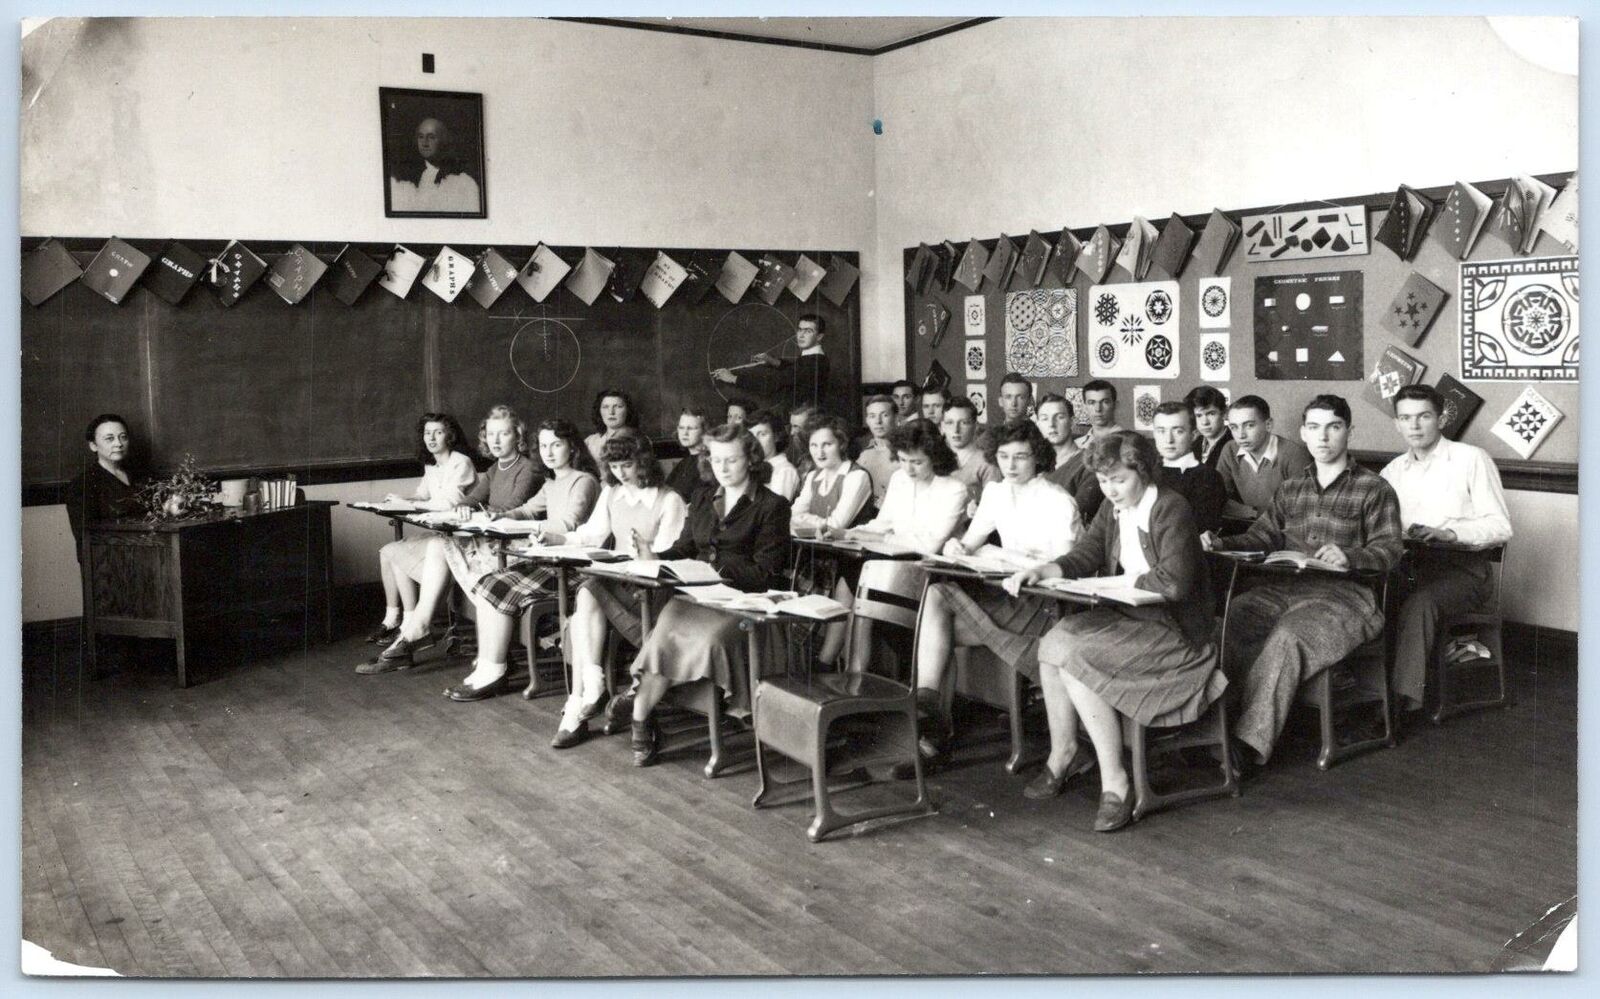 1946 ACCOMACK COUNTY VIRGINIA ATLANTIC HIGH SCHOOL STUDENTS IN CLASSROOM PHOTO